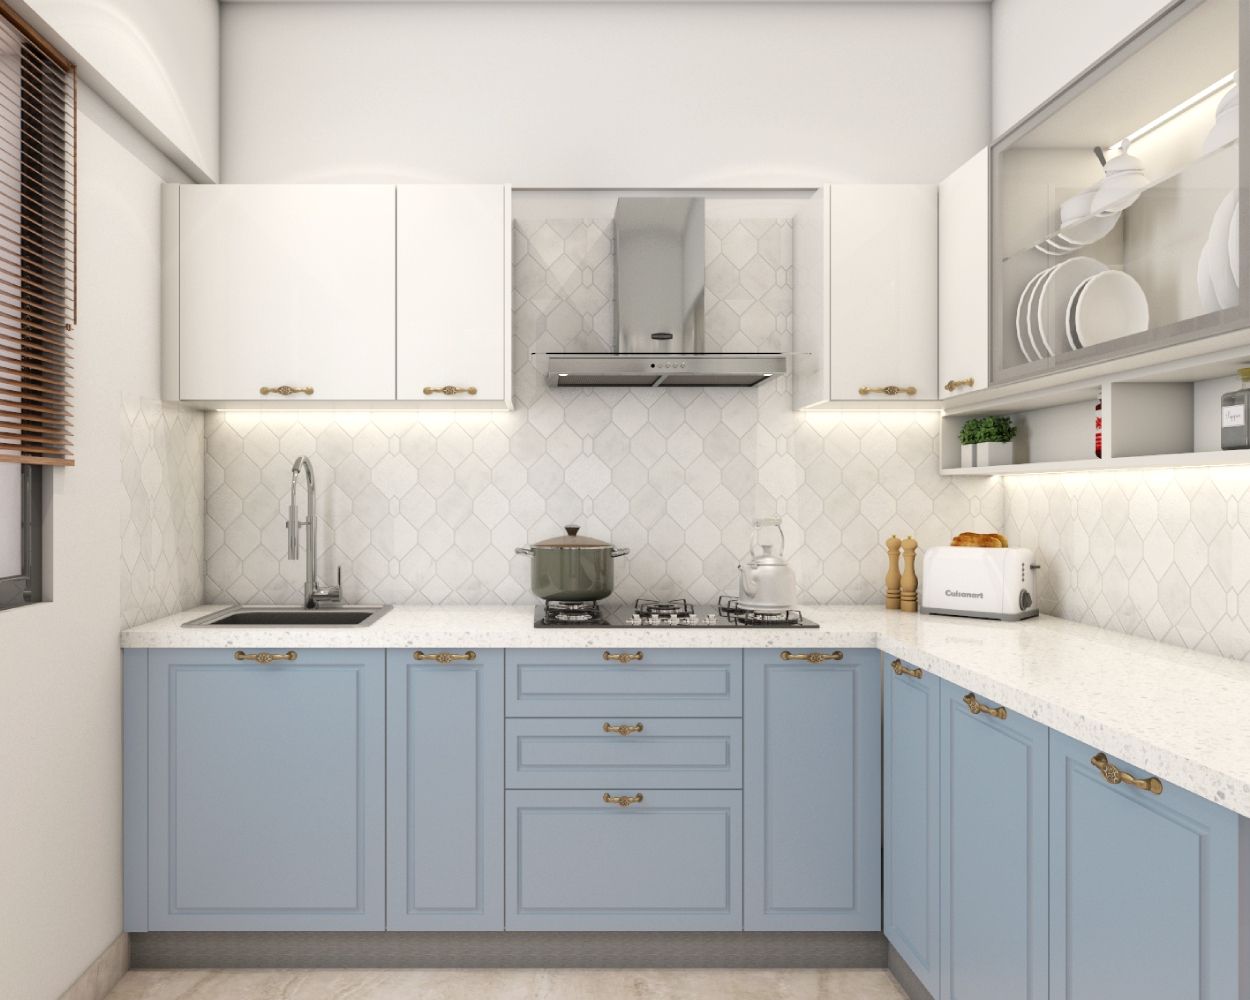 Modern L-Shape Modular Kitchen Design In Light Blue And Frosty White